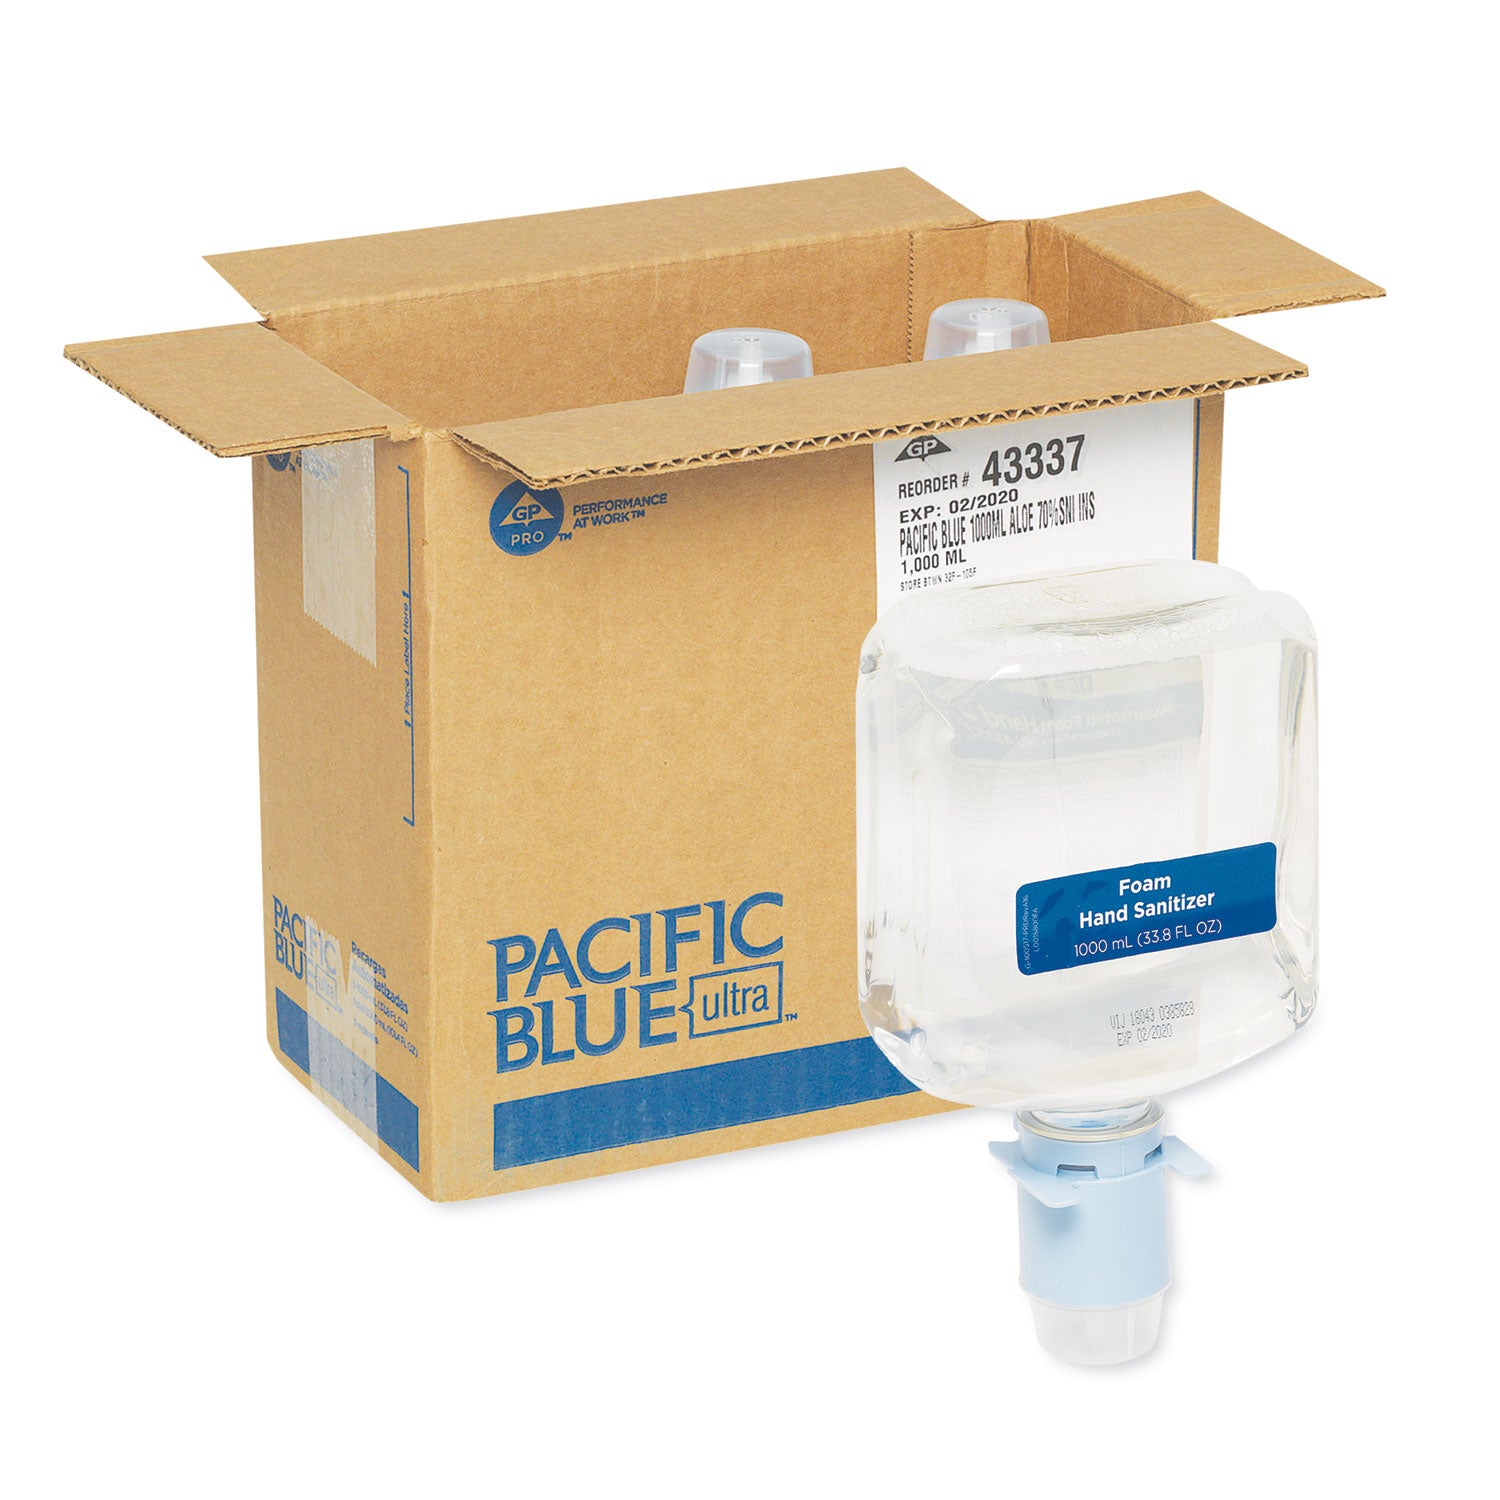 pacific-blue-ultra-automated-sanitizer-dispenser-refill-foam-hand-sanitizer-1000-ml-bottle-fragrance-free-3-carton_gpc43337 - 1